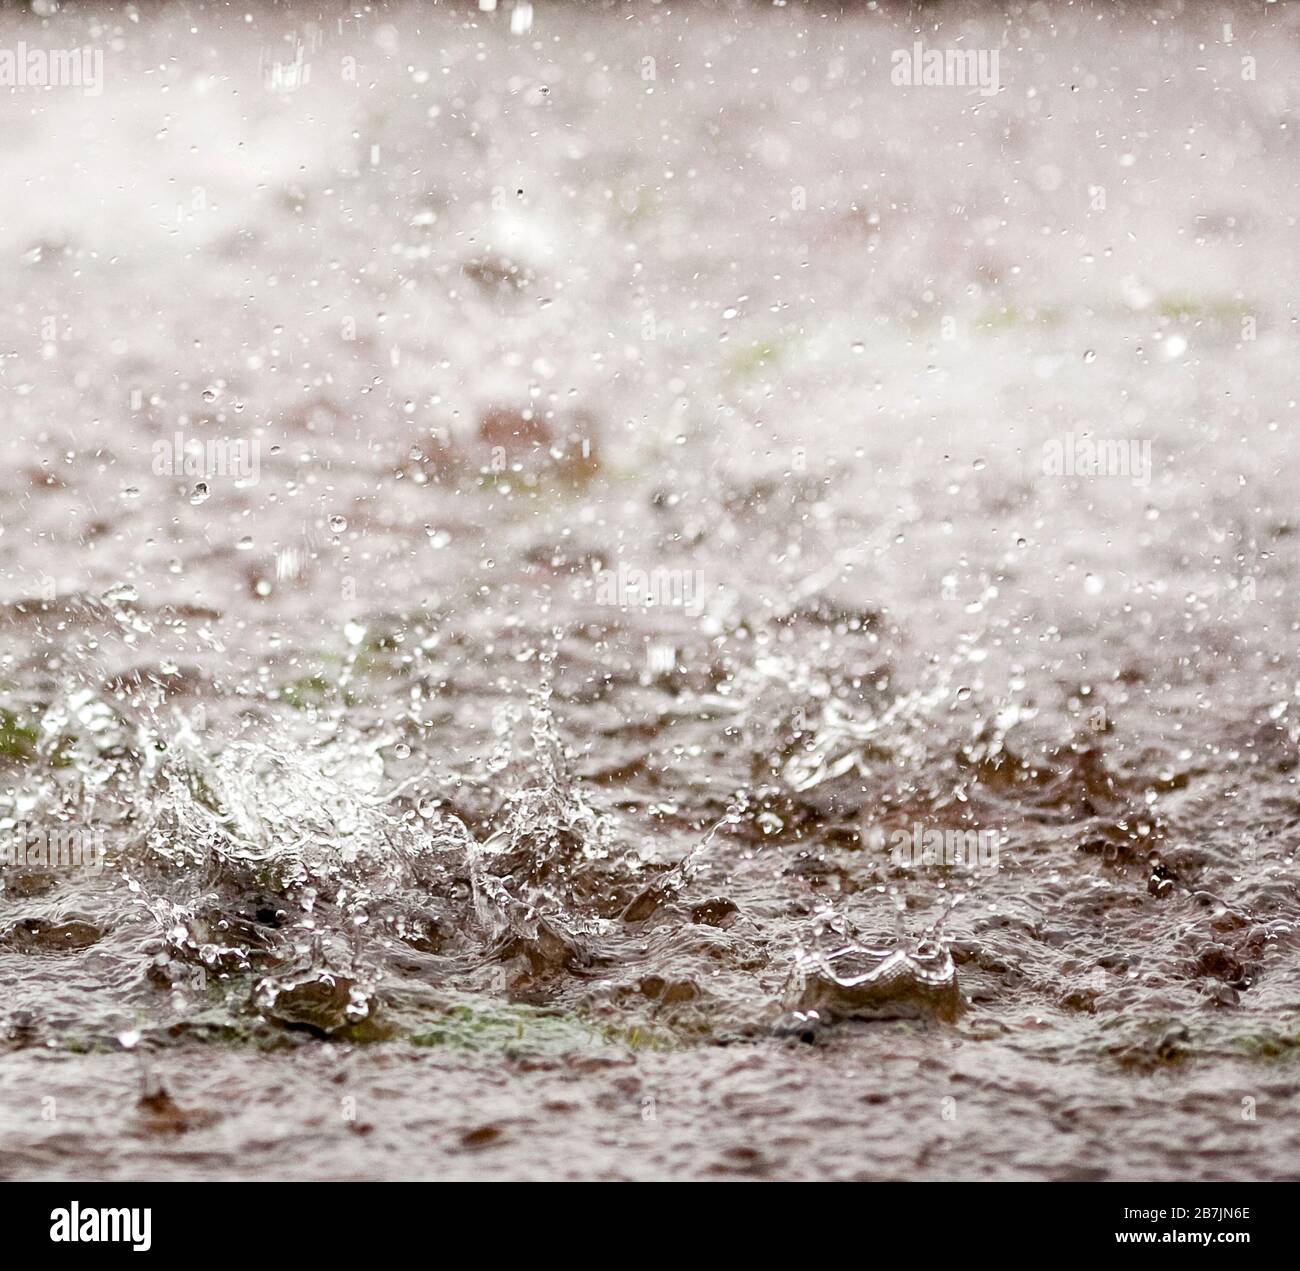 Heavy rain splashing in a puddle Stock Photo